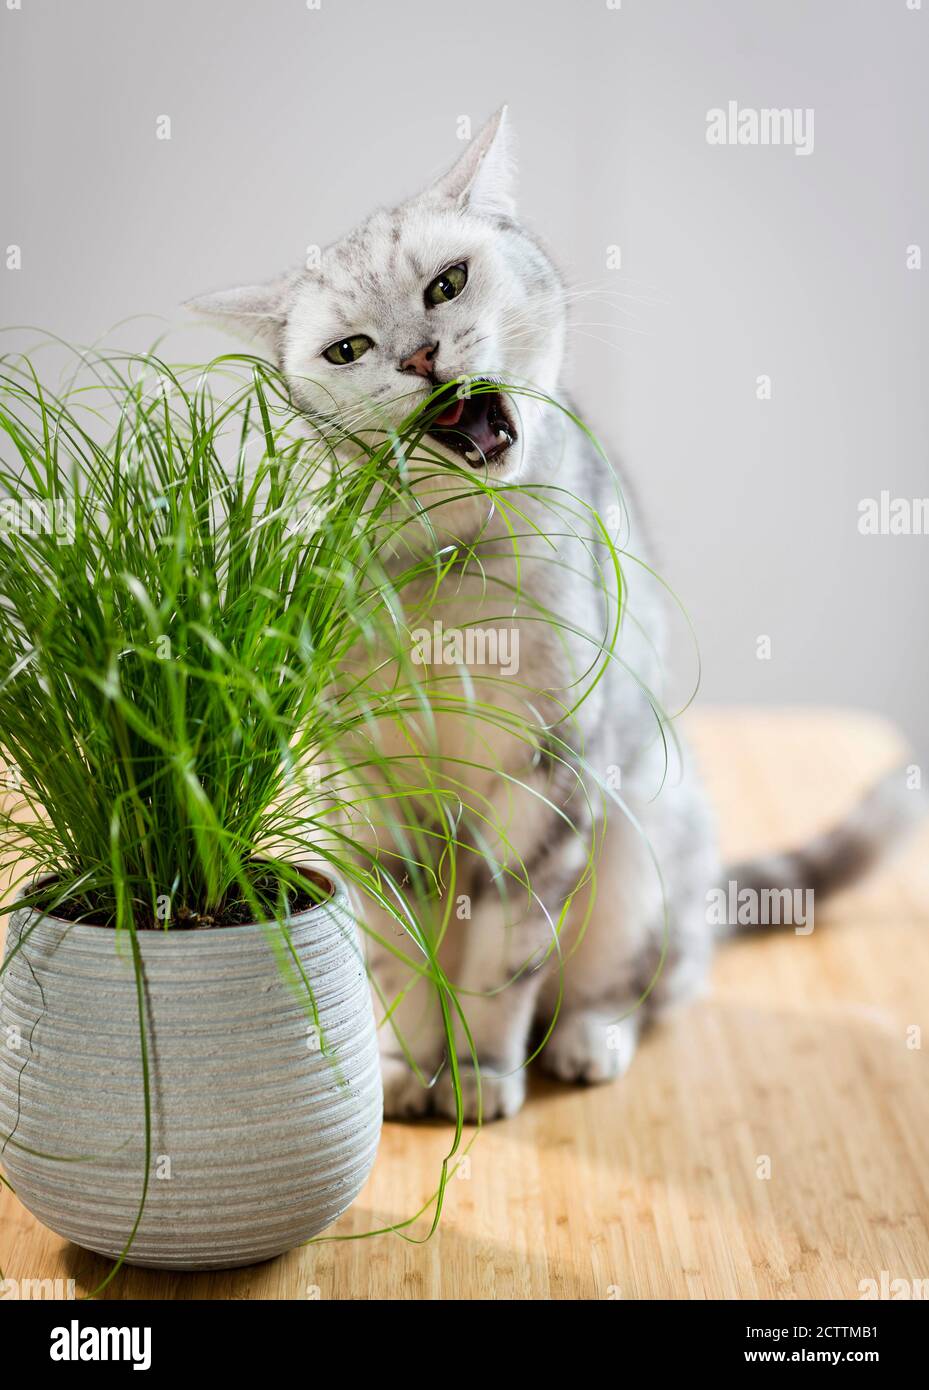 Britisch Kurzhaar. Tabby tomcat eating cat grass. Stock Photo